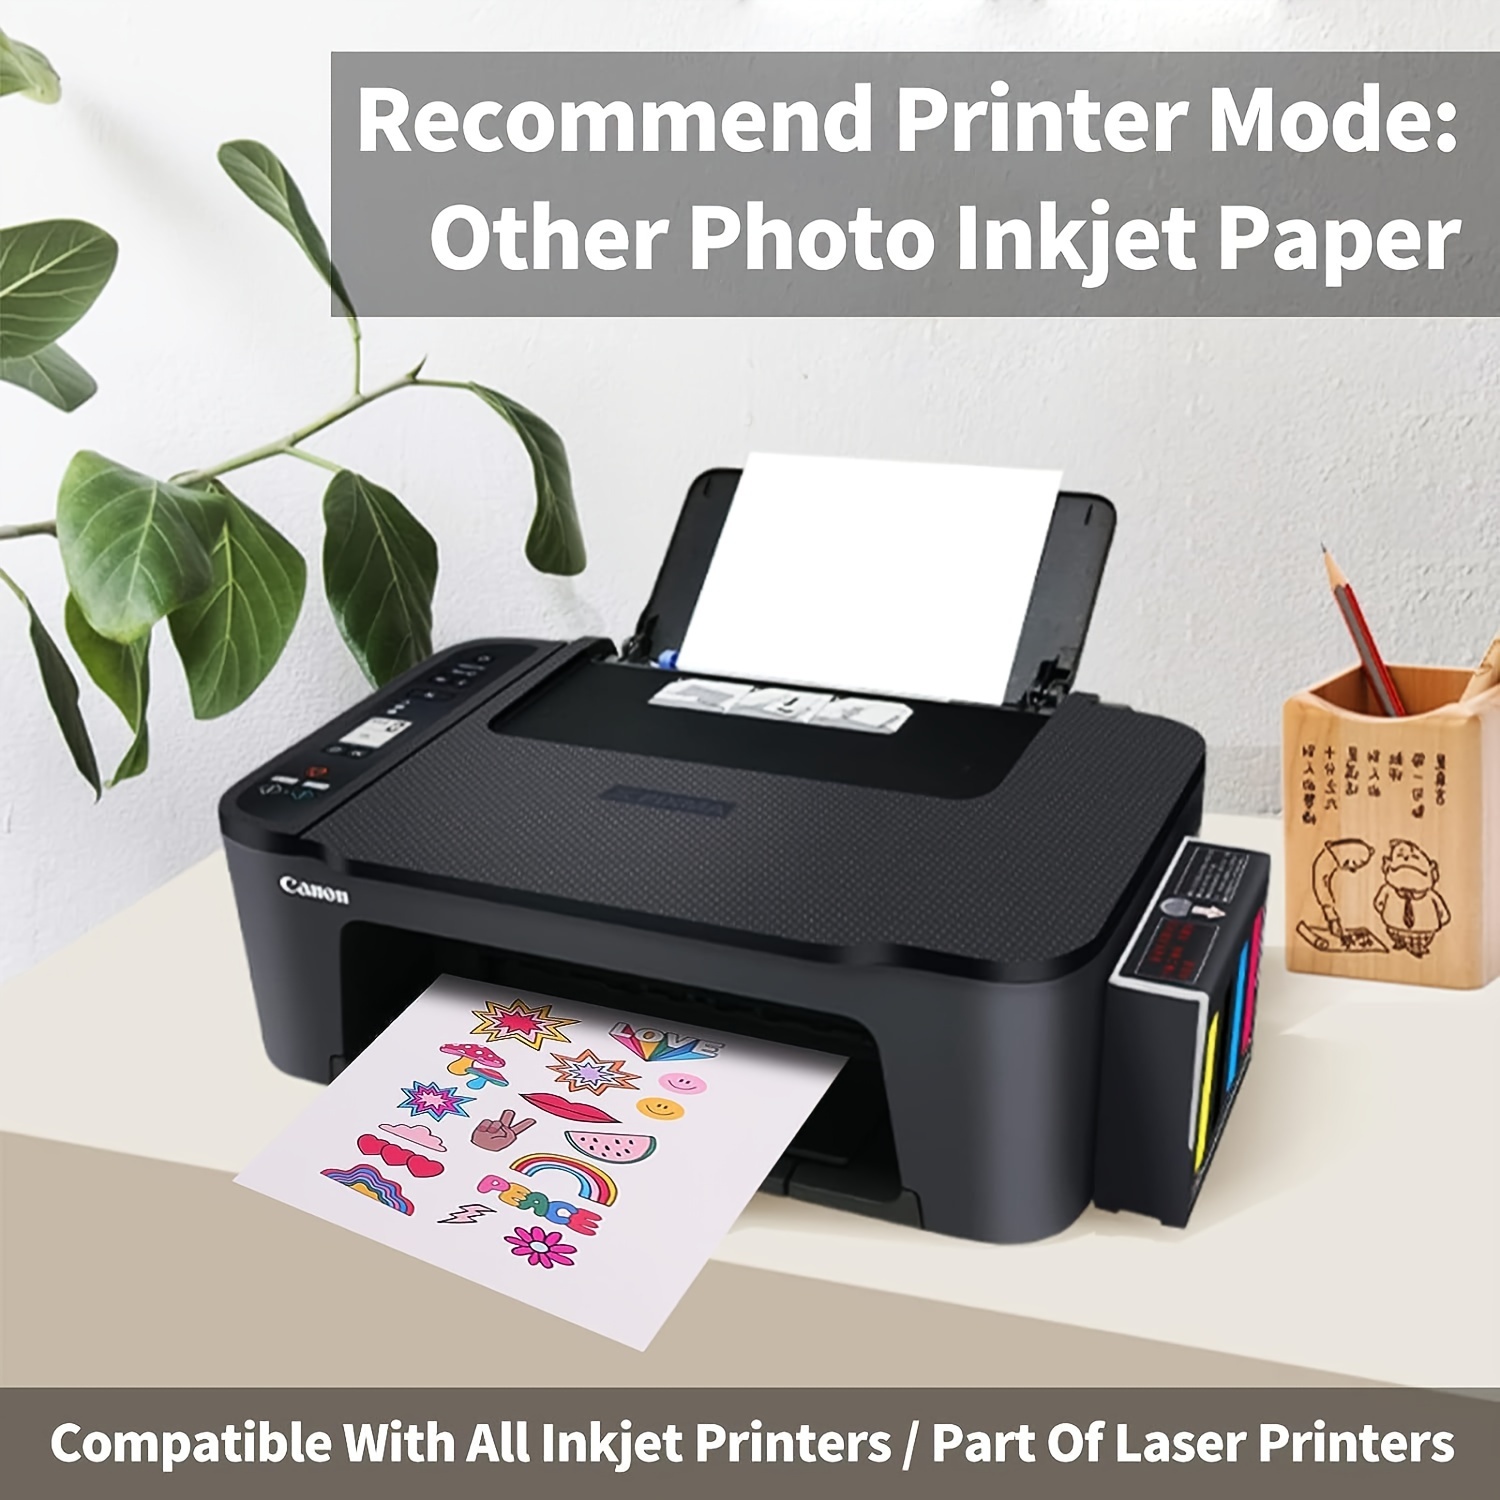 Printable Vinyl Waterproof Sticker Paper for Inkjet and Laser